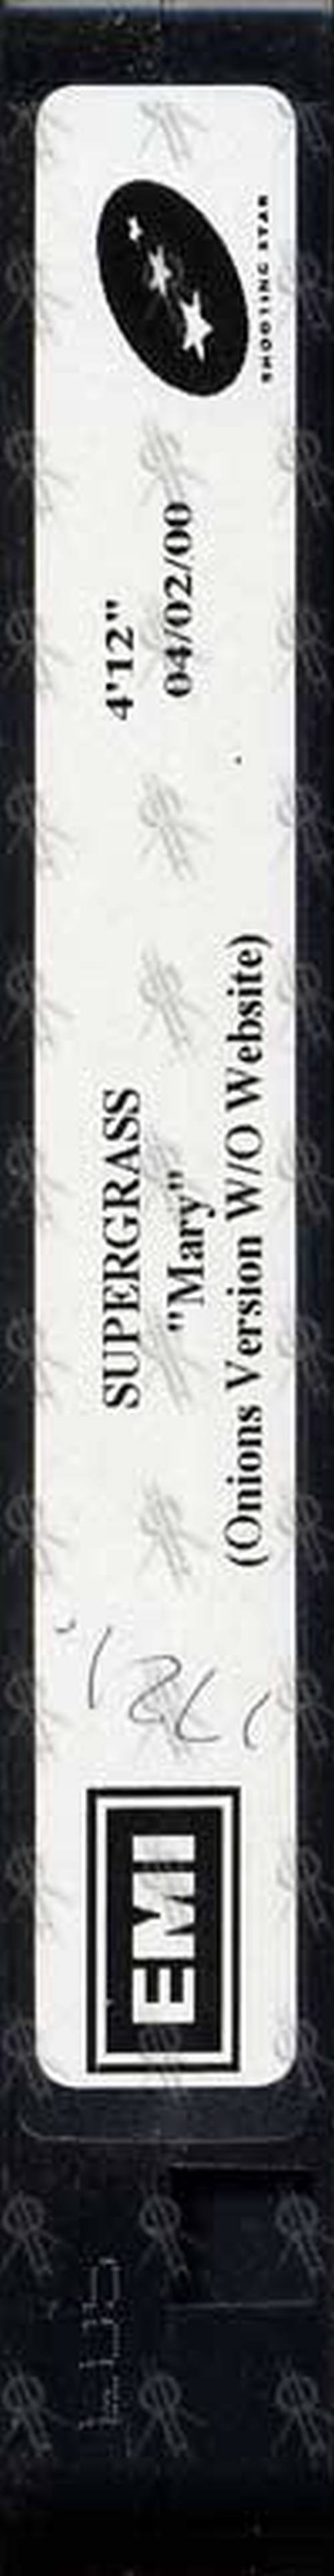 SUPERGRASS - Mary (Onions Version W/O Website) - 1